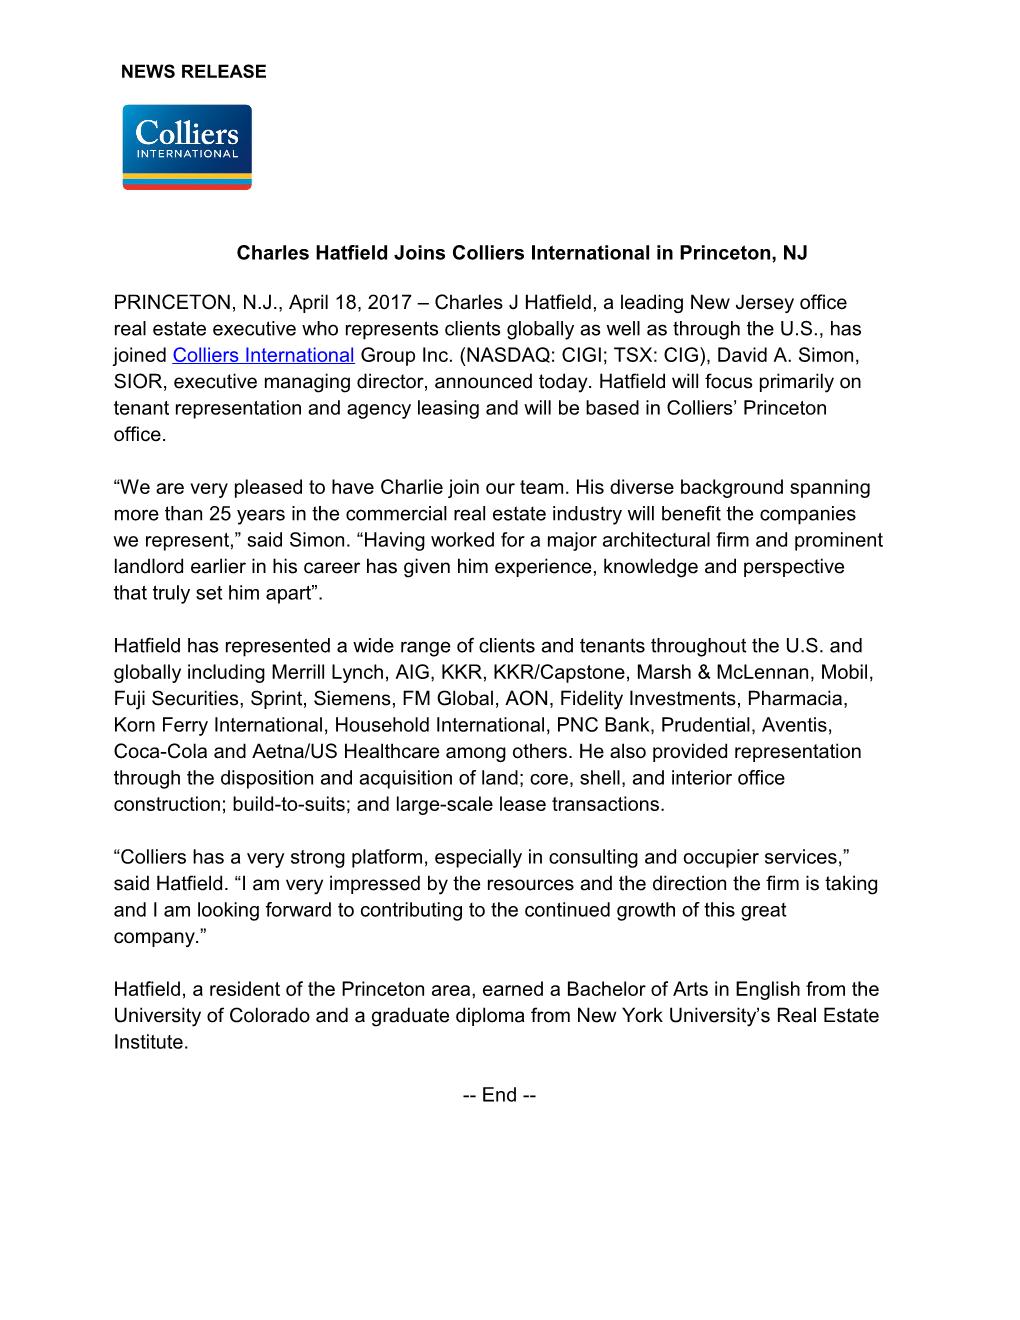 Charles Hatfield Joins Colliers International in Princeton, NJ